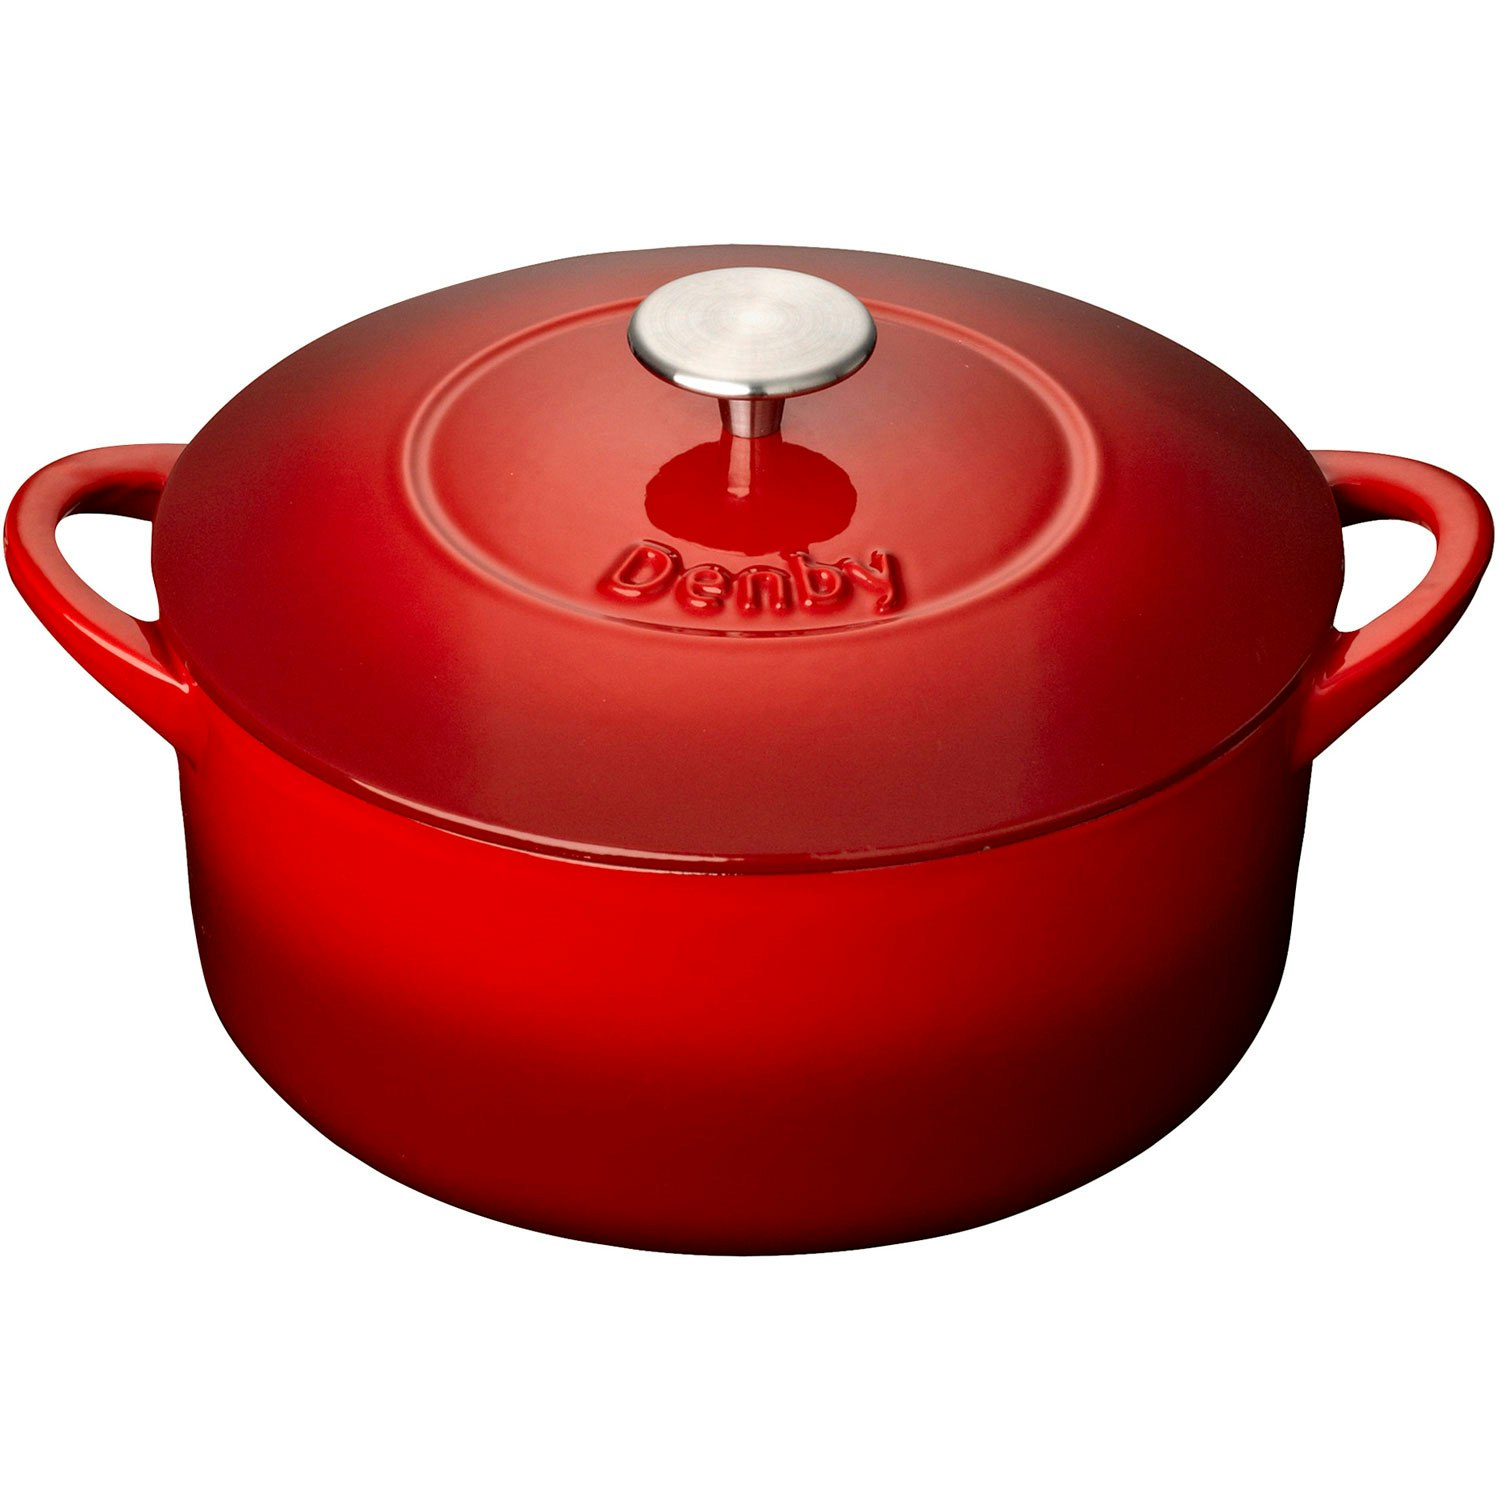 https://royaldesign.com/image/2/denby-cast-iron-26cm-round-casserole-9